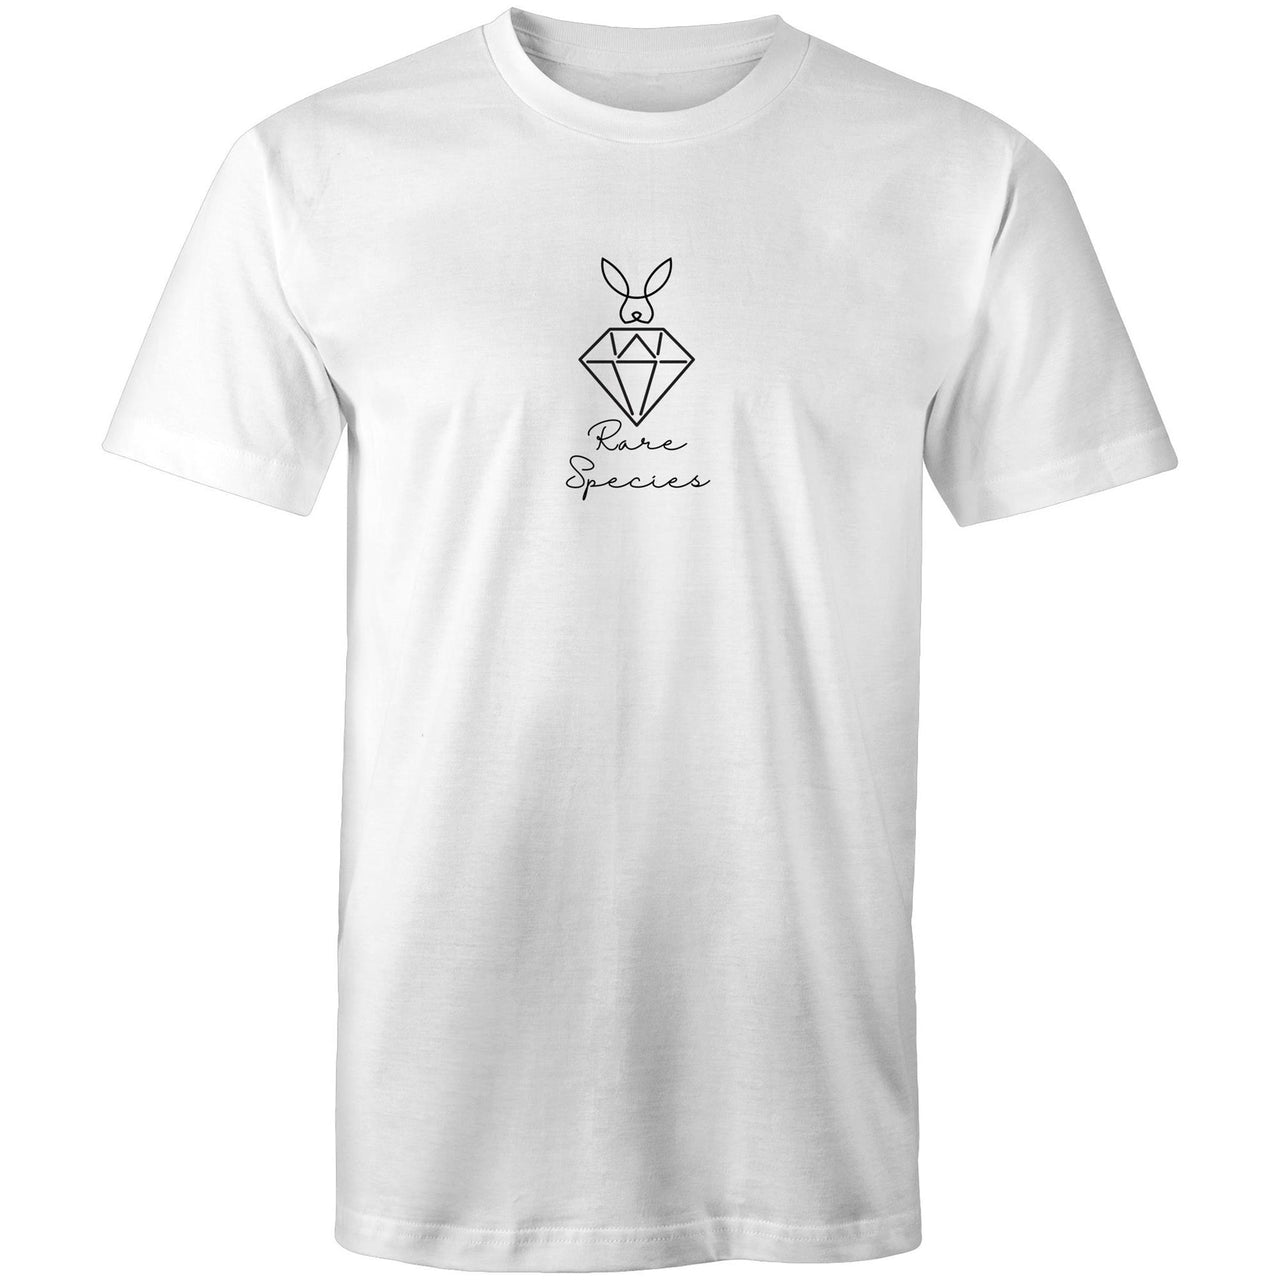 CBF Rare Species Crew T-Shirt white by CBF Clothing